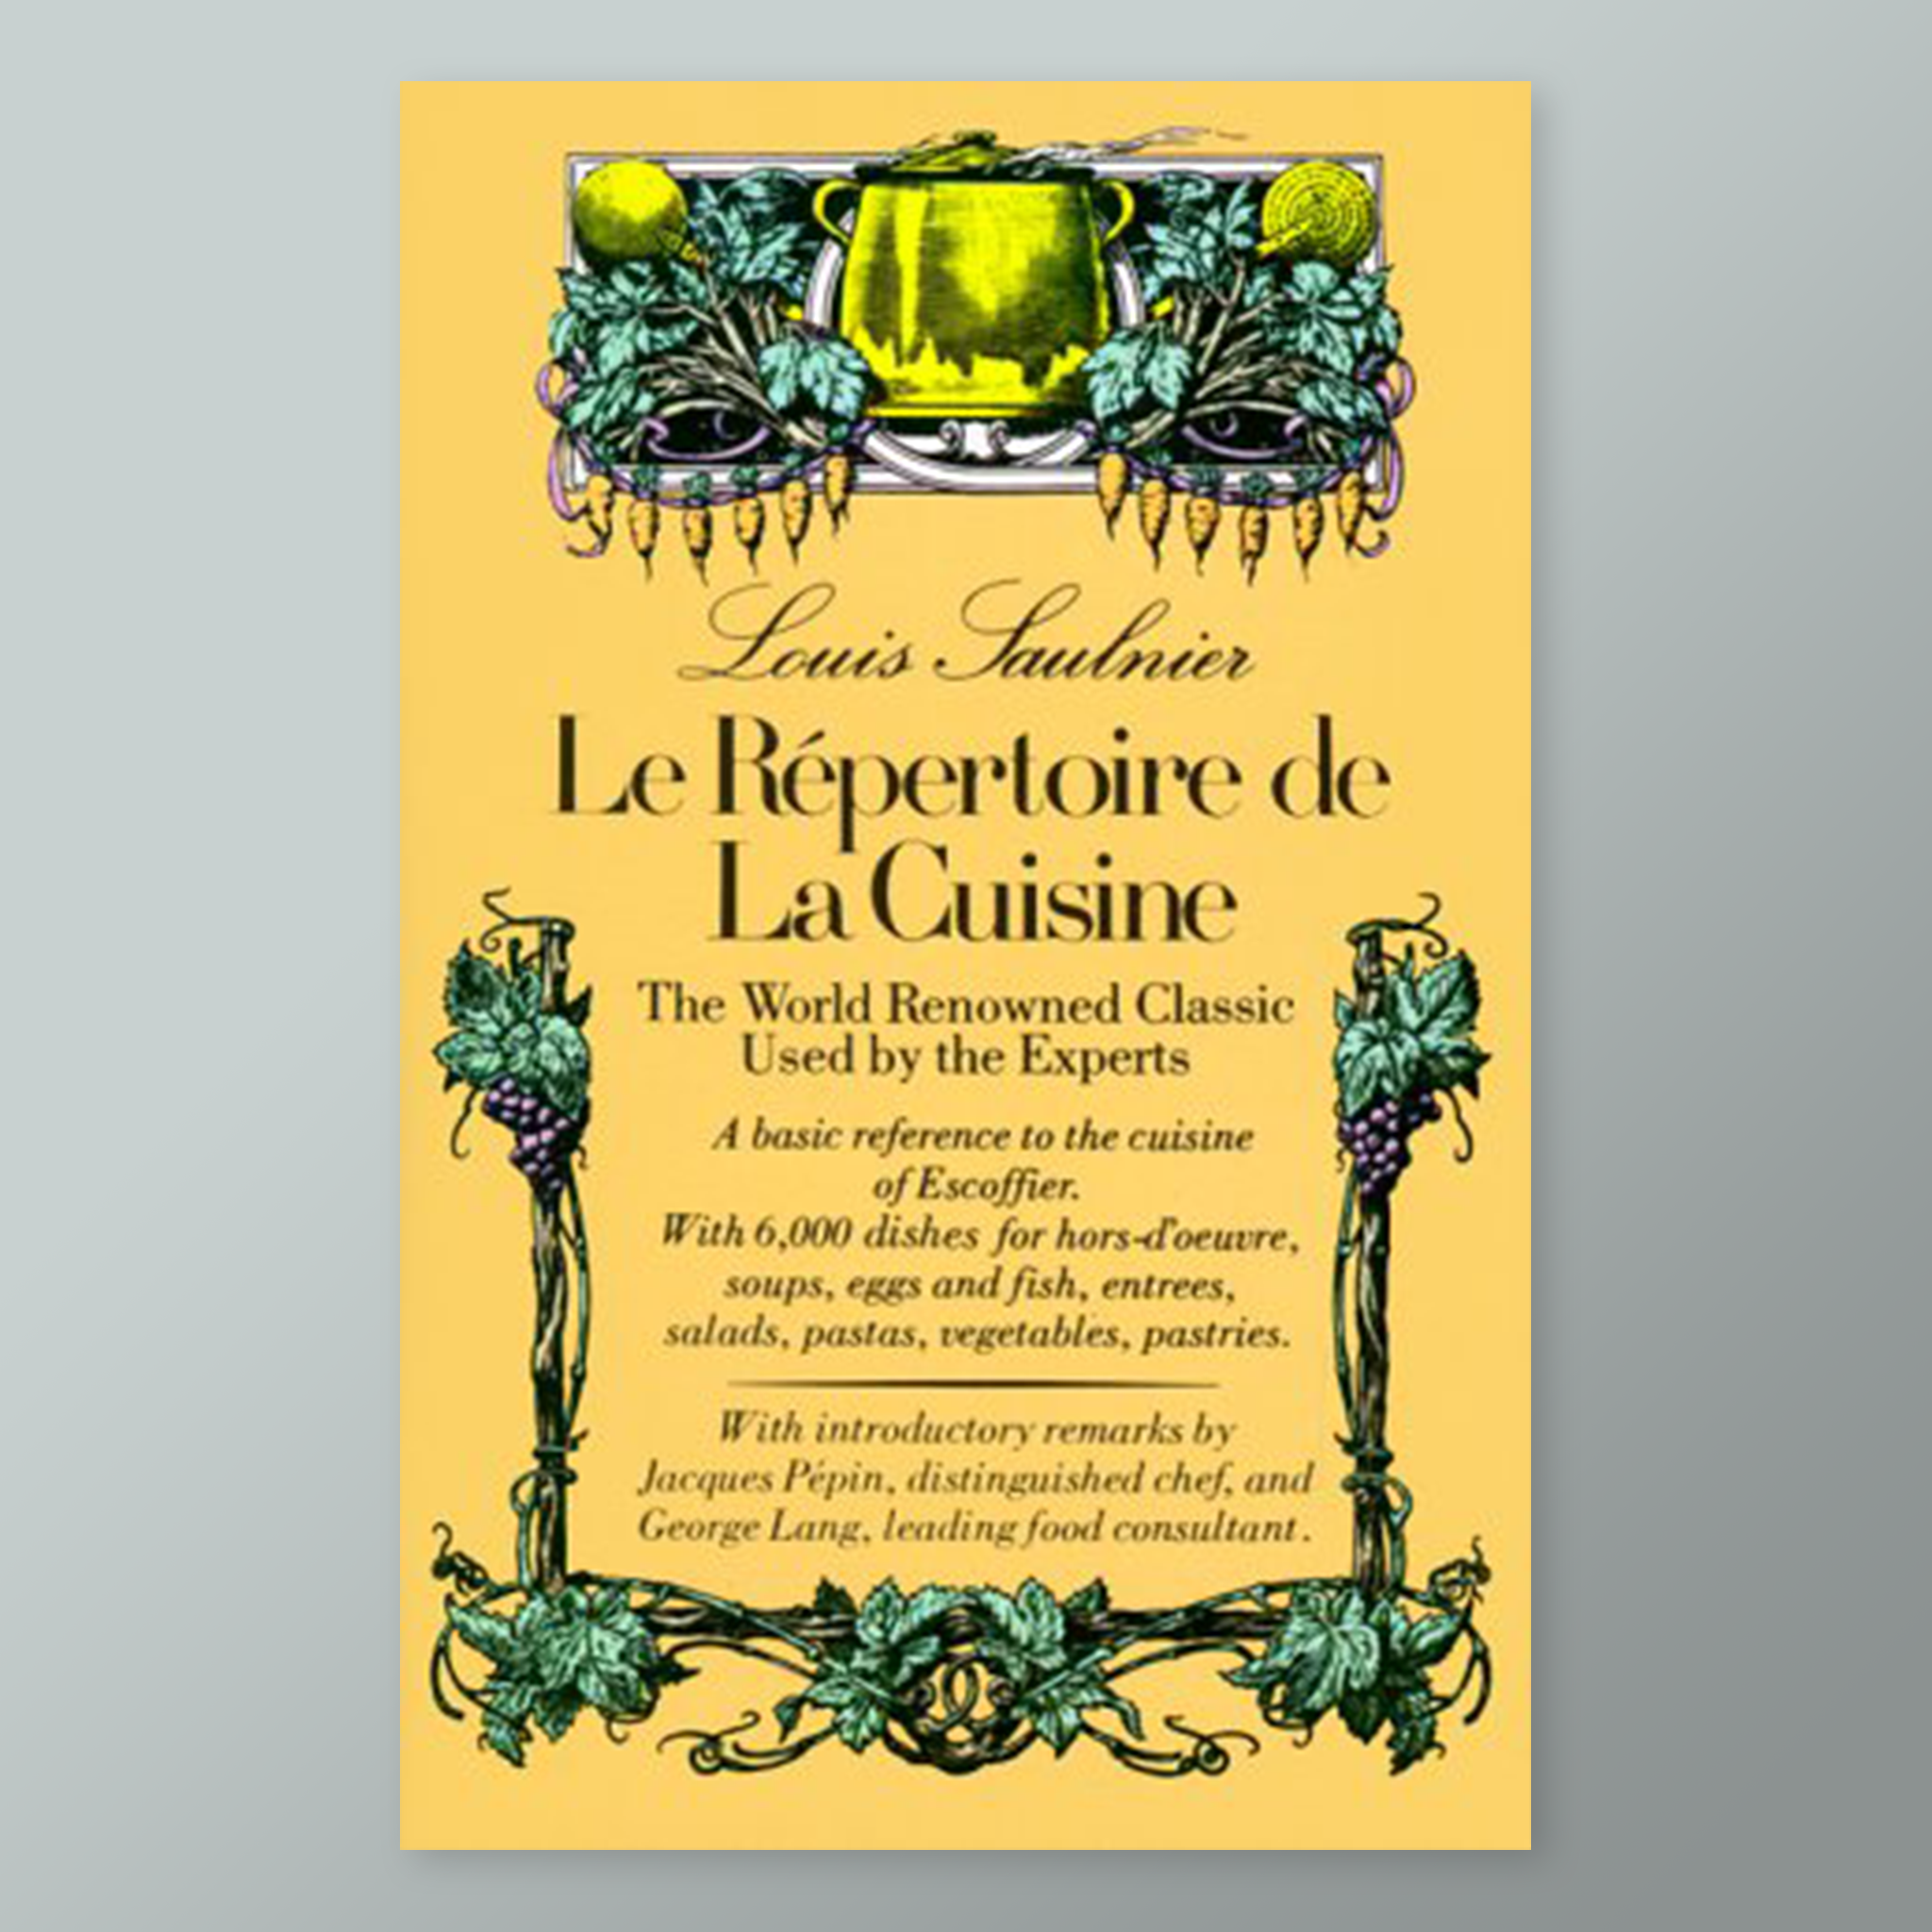 Le Repertoire de La Cuisine cookbook